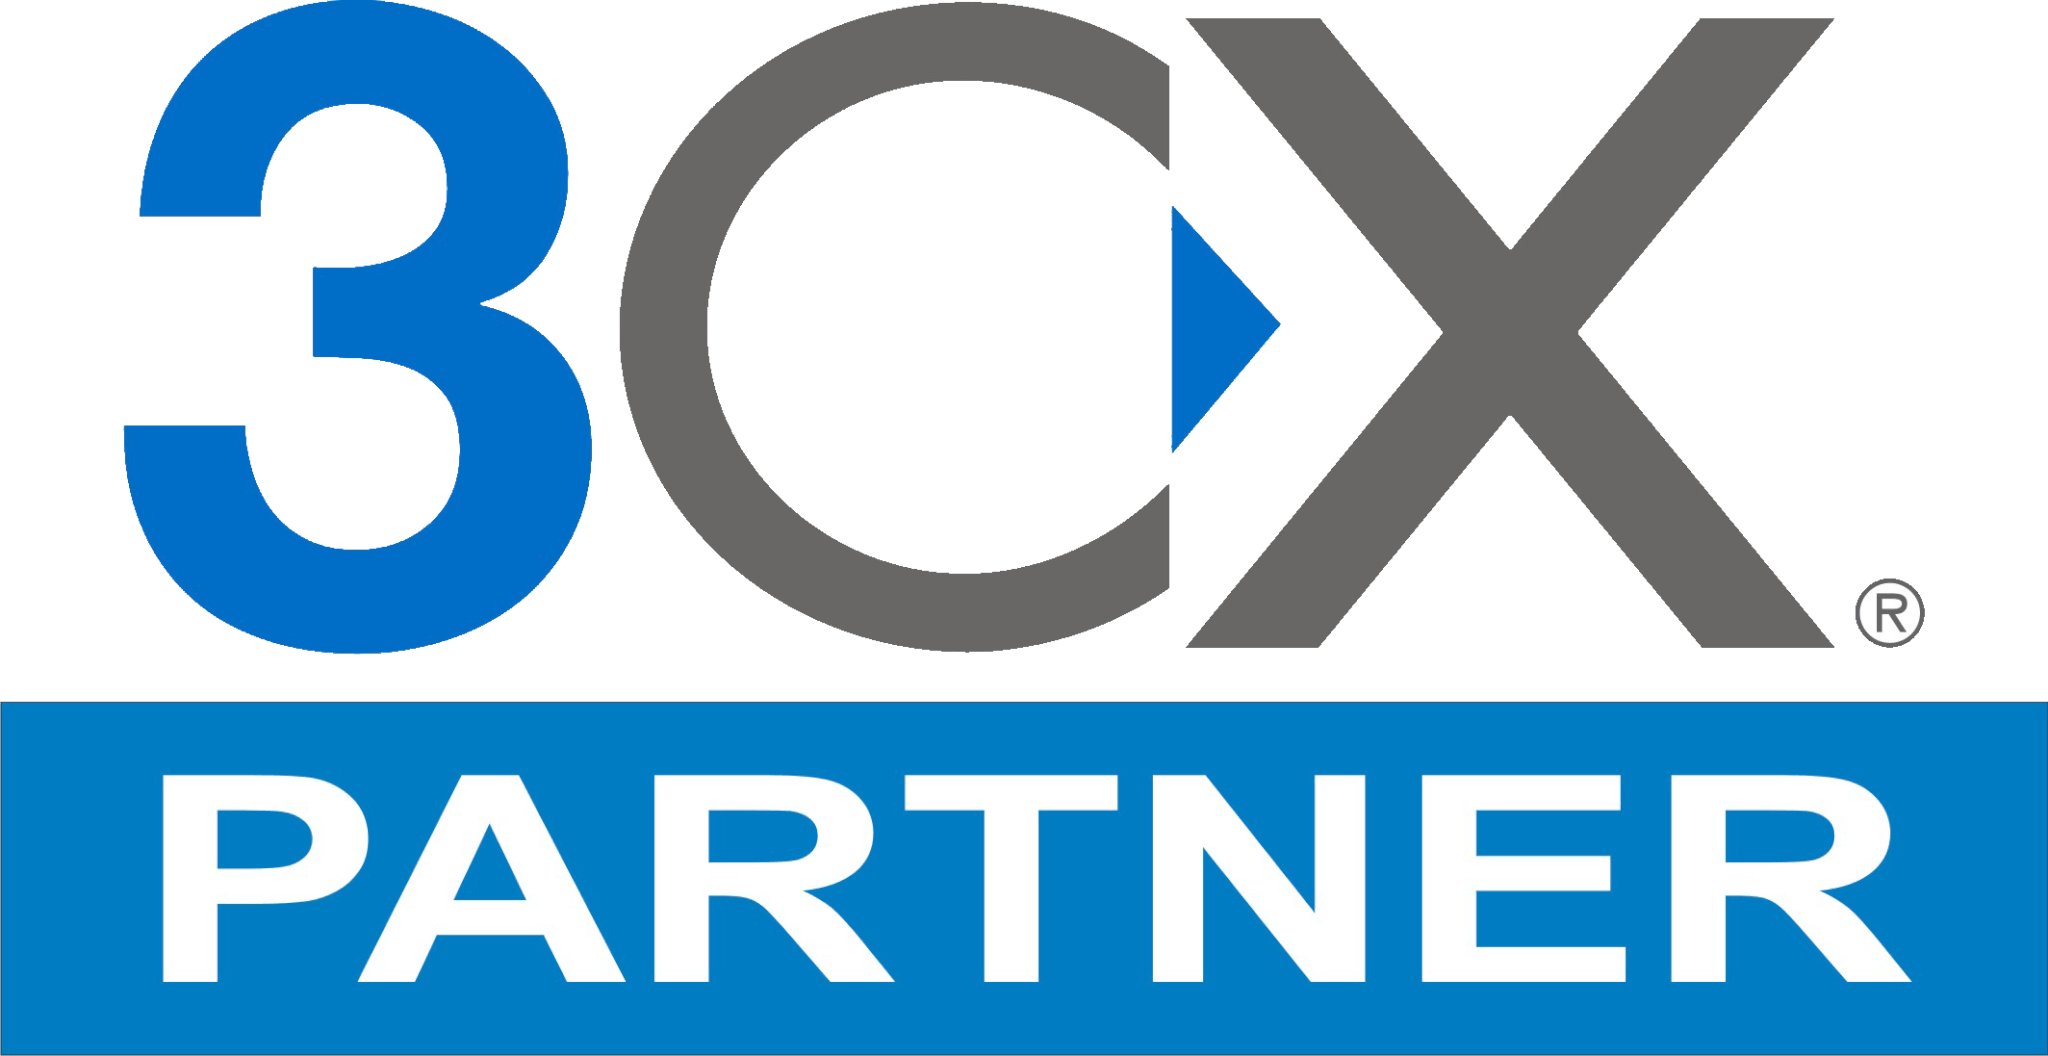 https://kotoritechnologies.com/wp-content/uploads/2020/03/3CX-partner-logo-hd.png